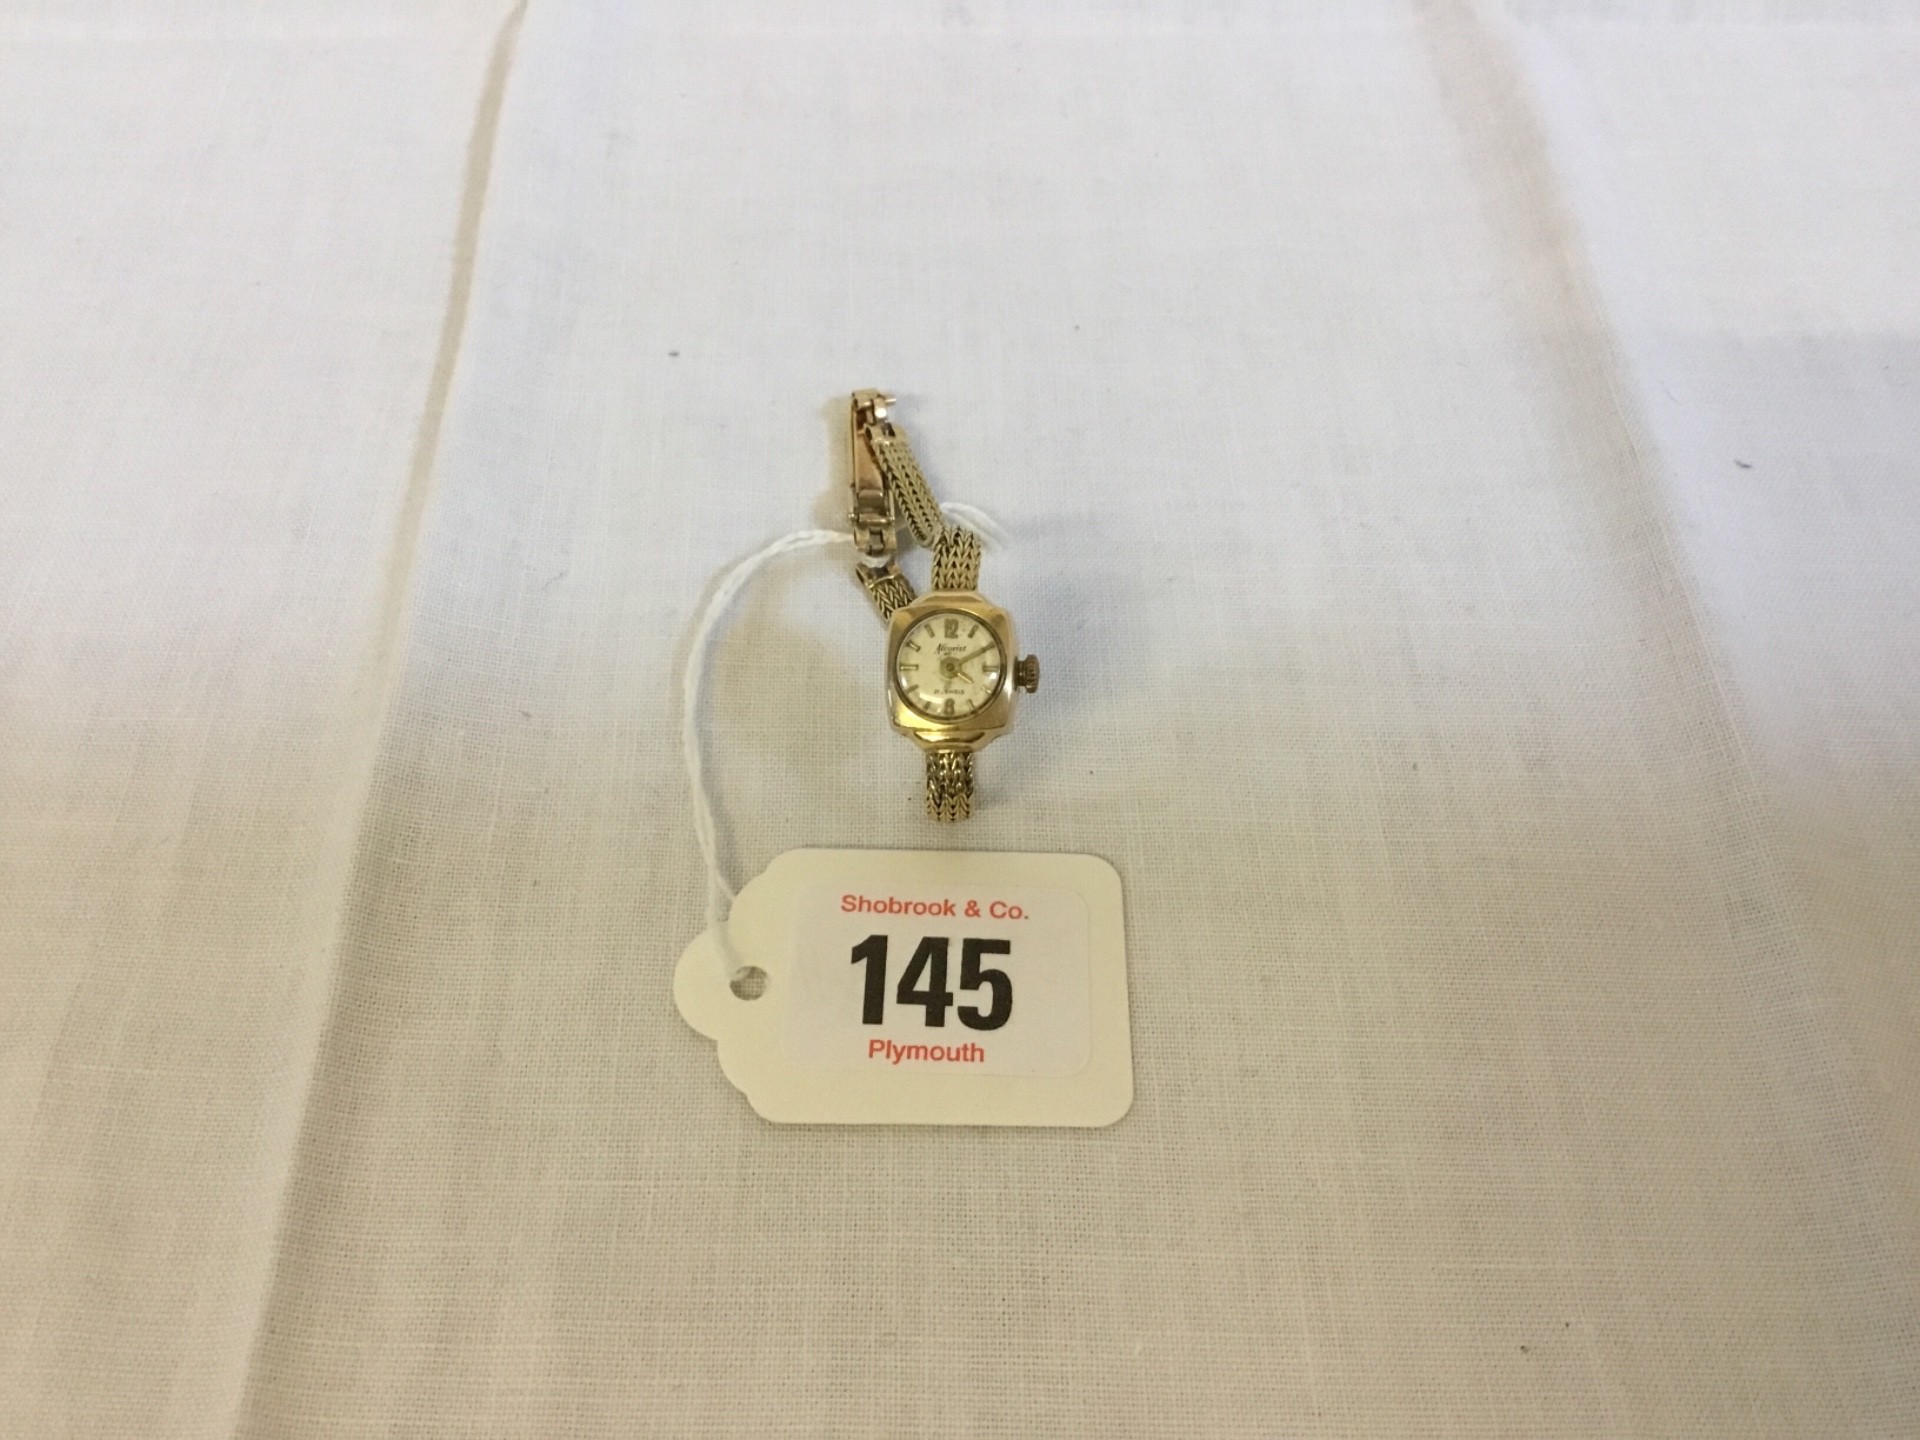 Lot No.145 - 9ct GOLD LADIES WRISTWATCH - Antique Auction : Wednesday